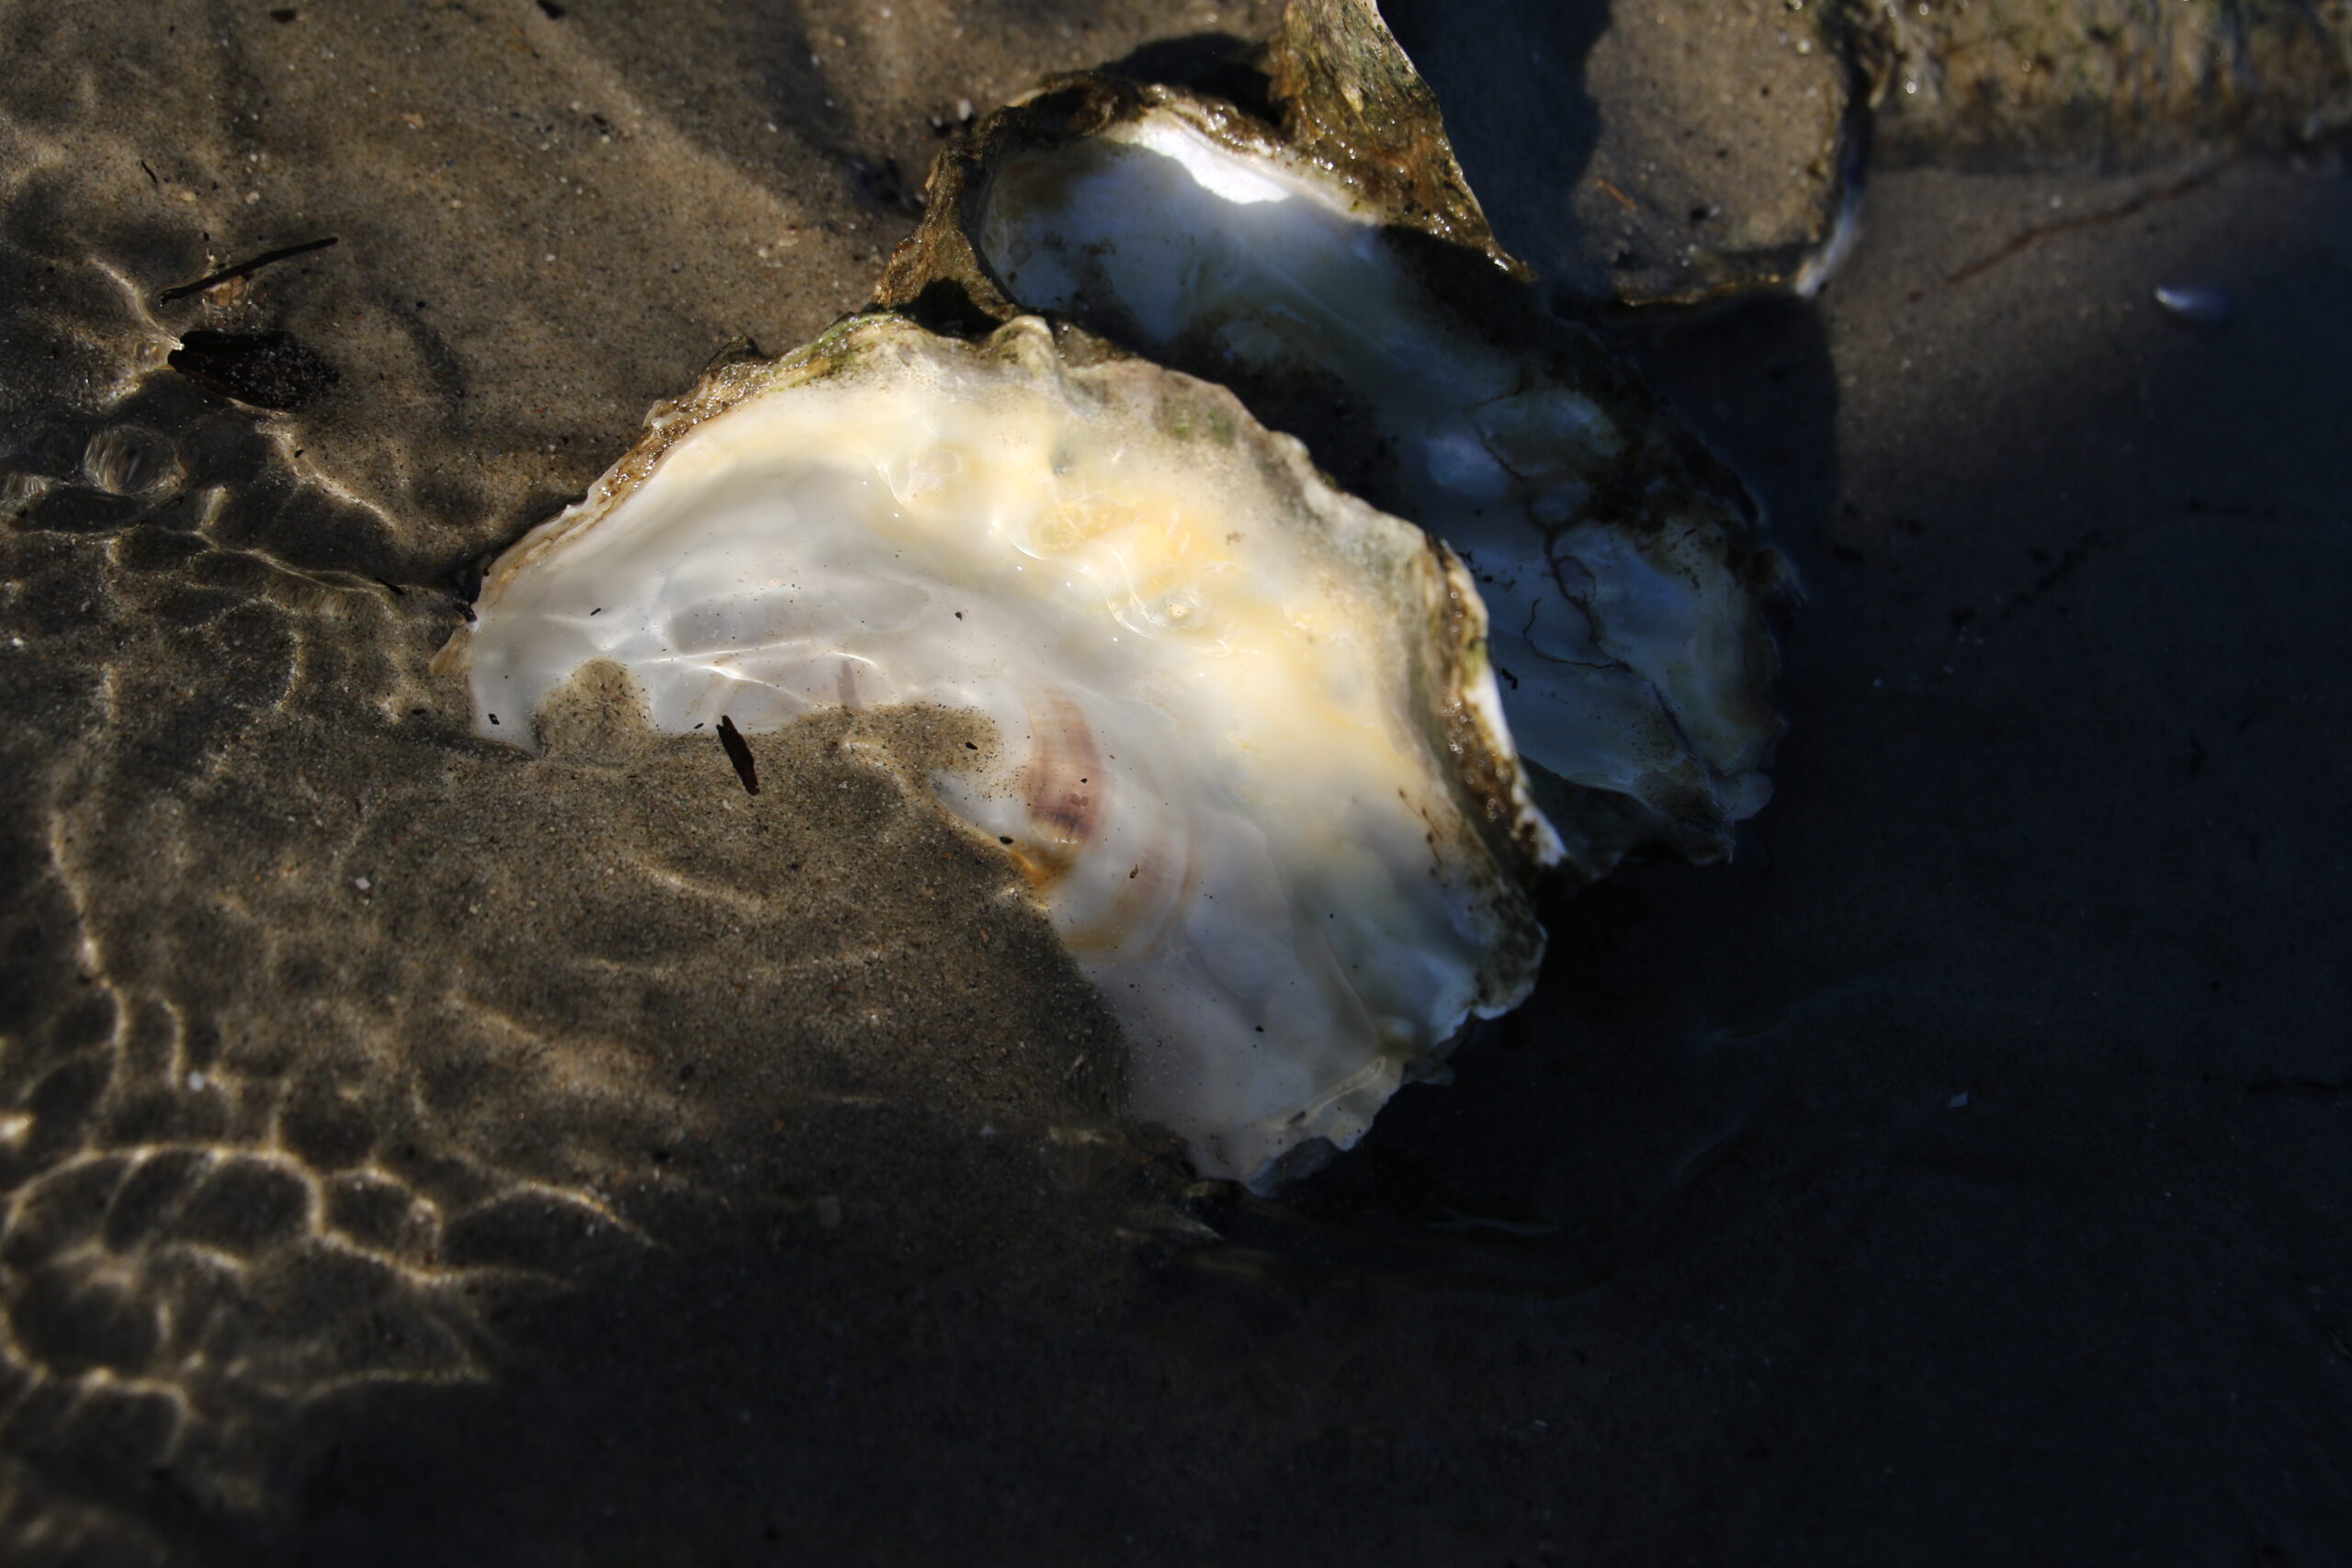 oyster restoration